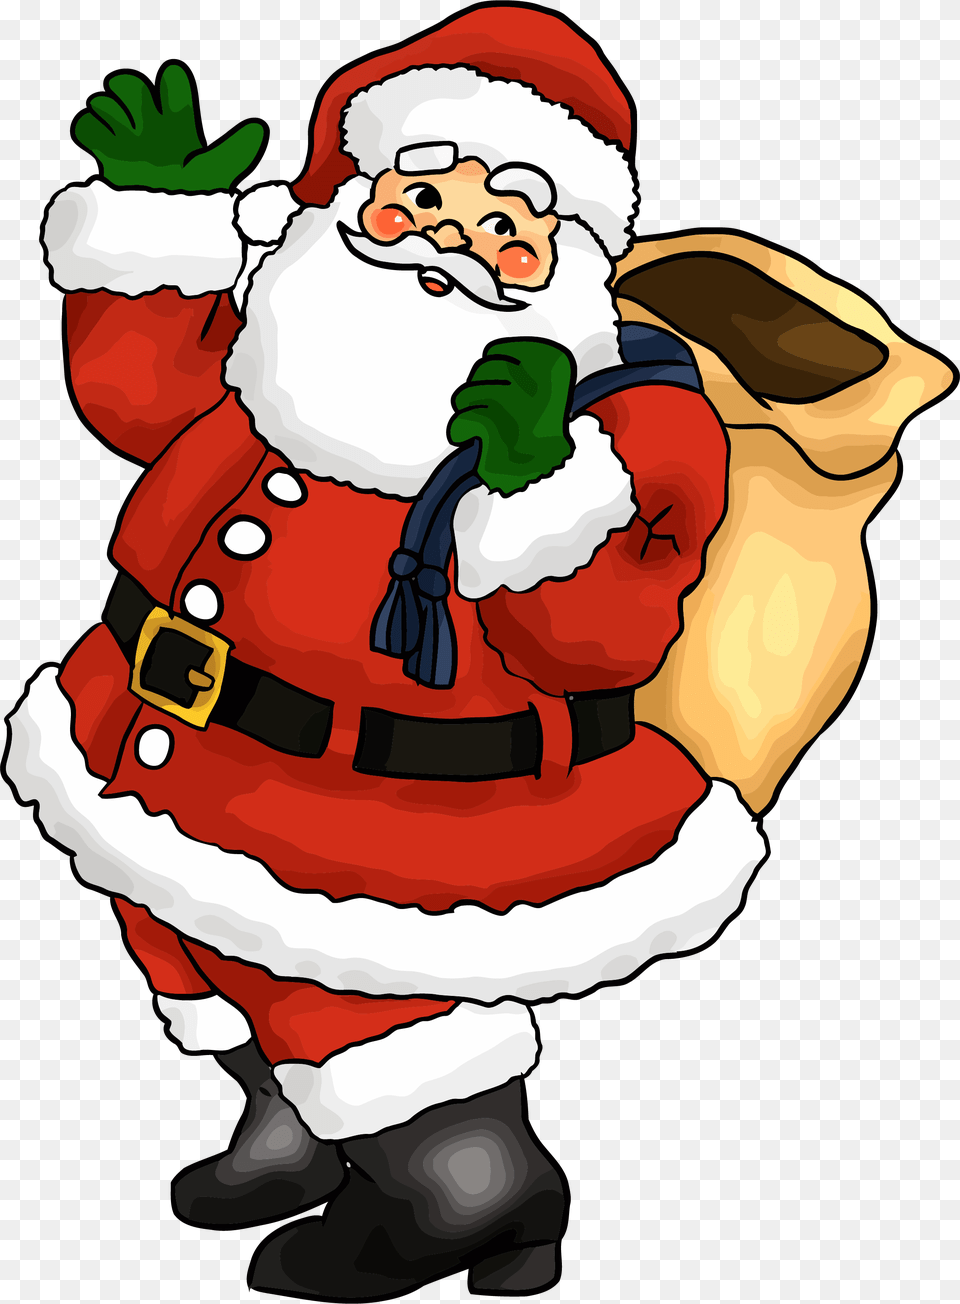 Christmas Santa Claus Bye Cartoon Santa Claus Animated, Baby, Person, Outdoors, Nature Png Image